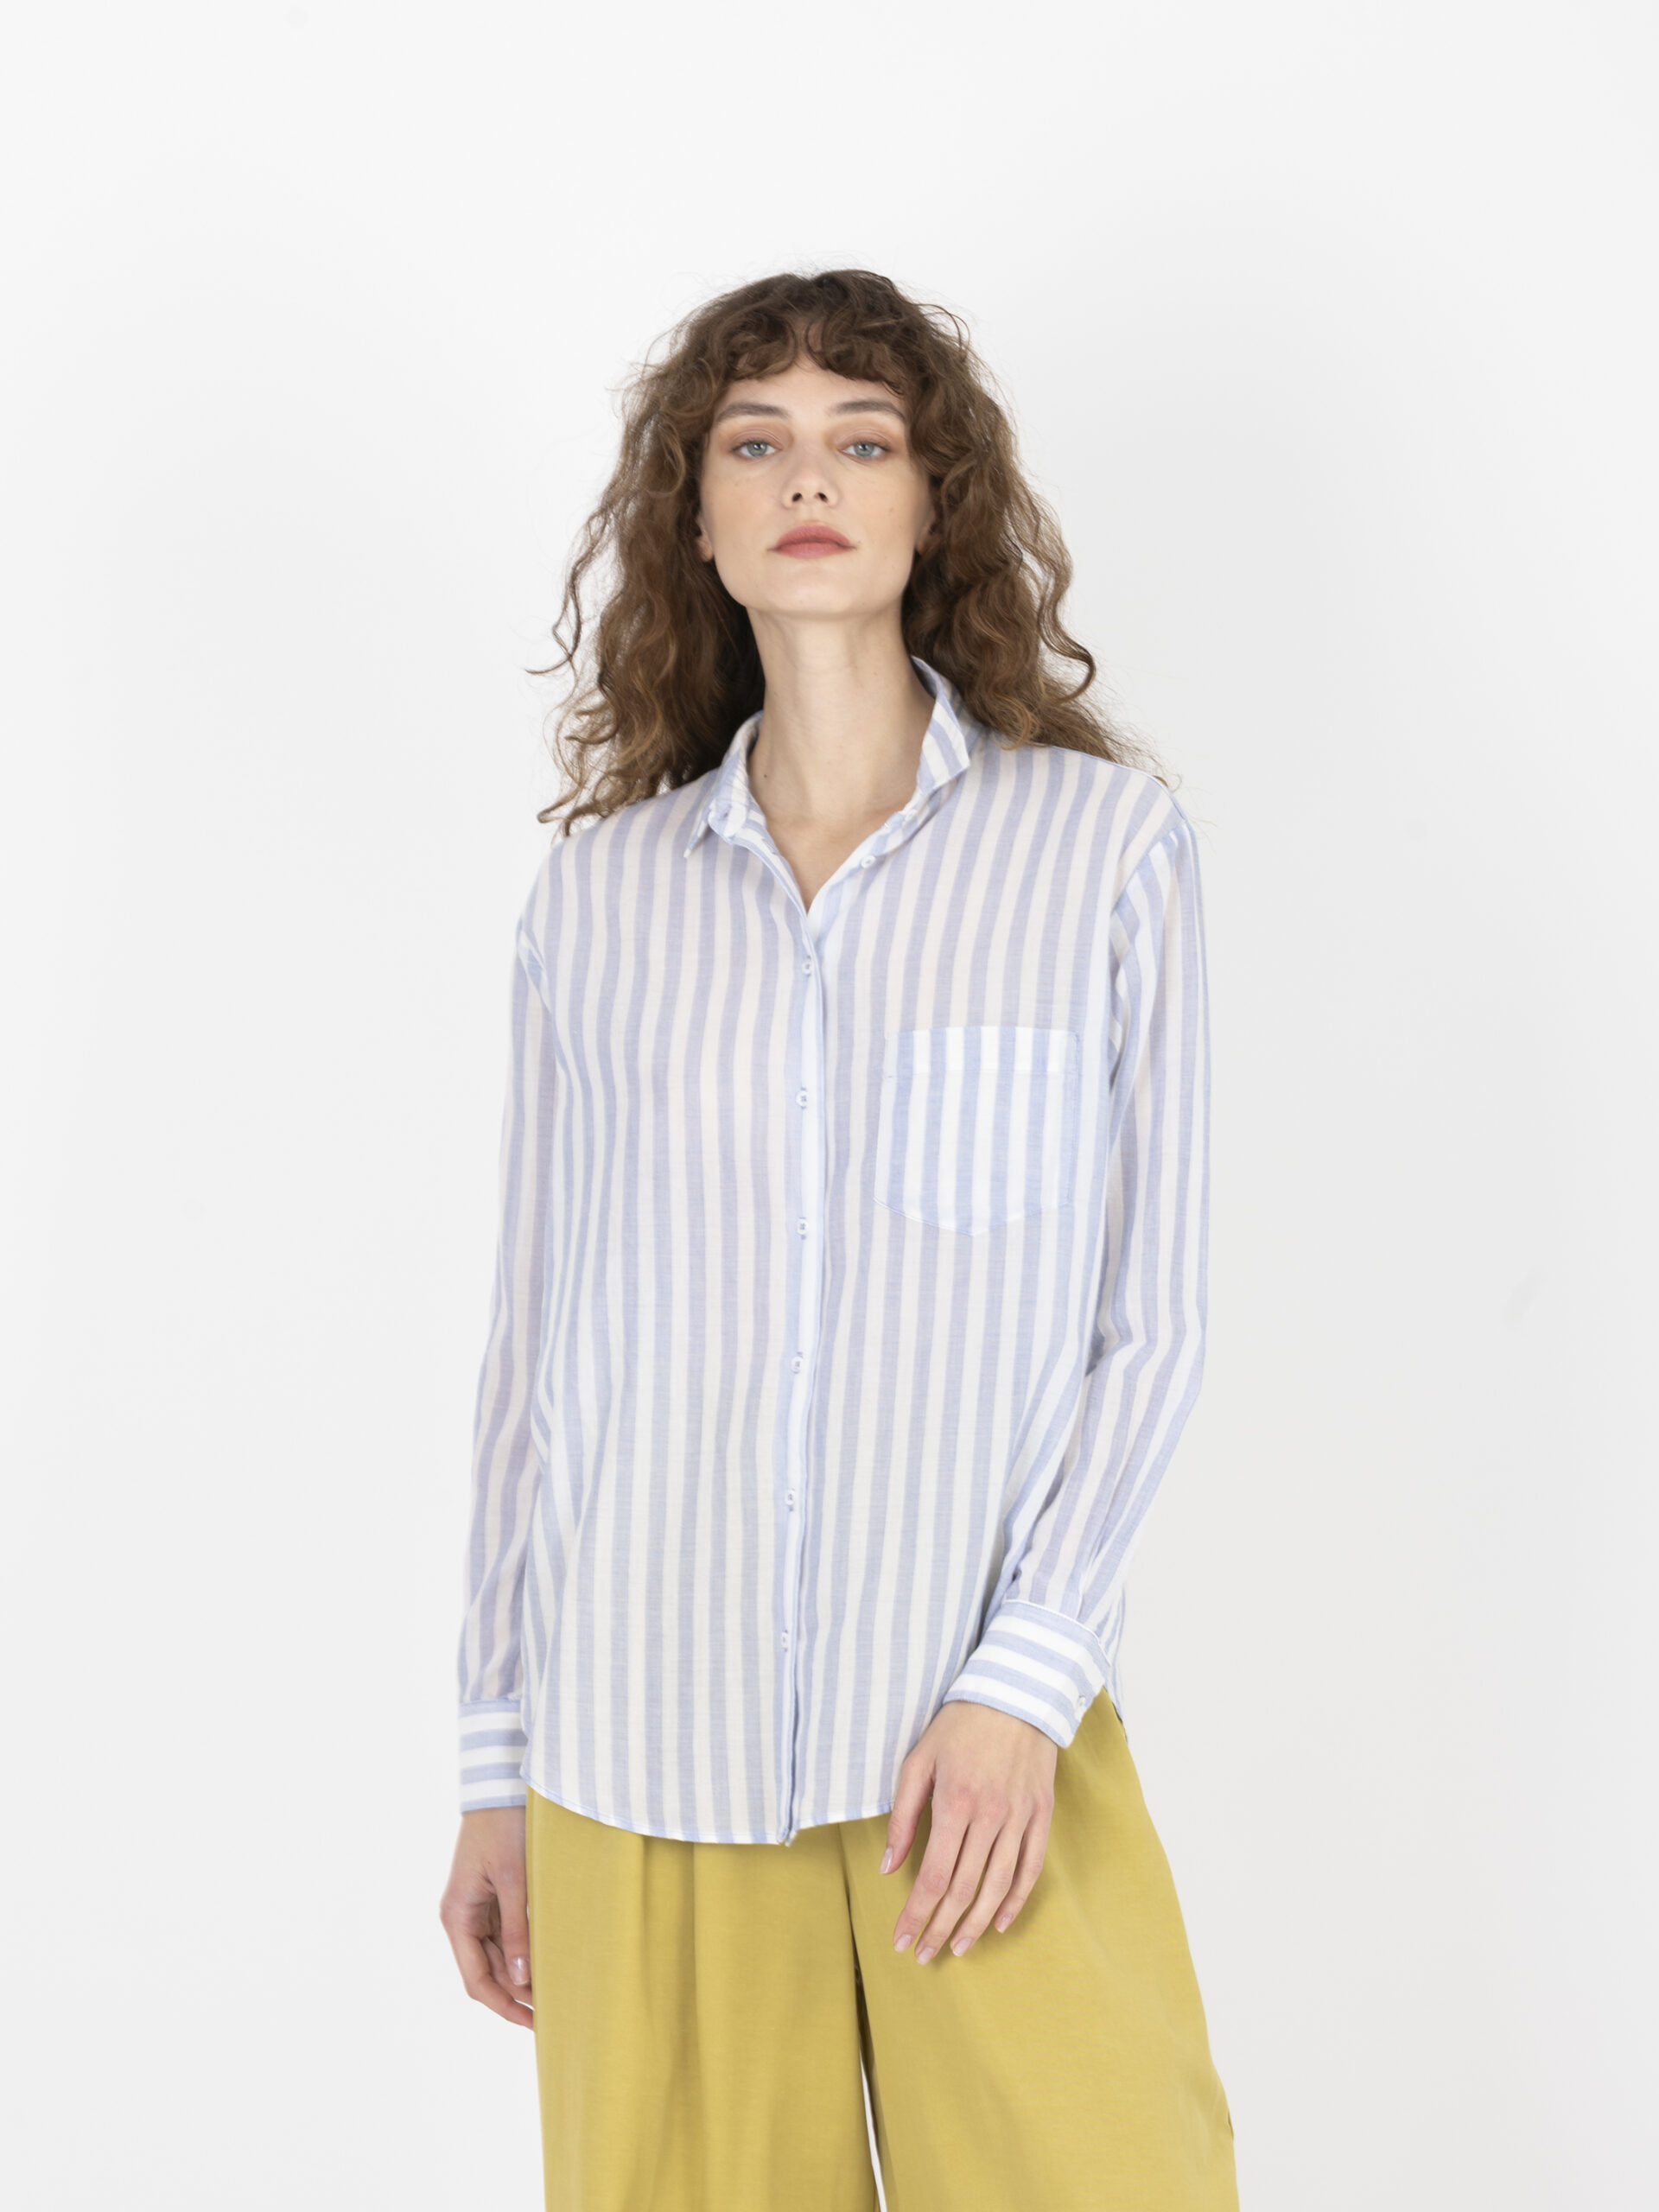 manon-blue-striped-cotton-shirt-classic-collar-sacrecoeur-matchboxathens